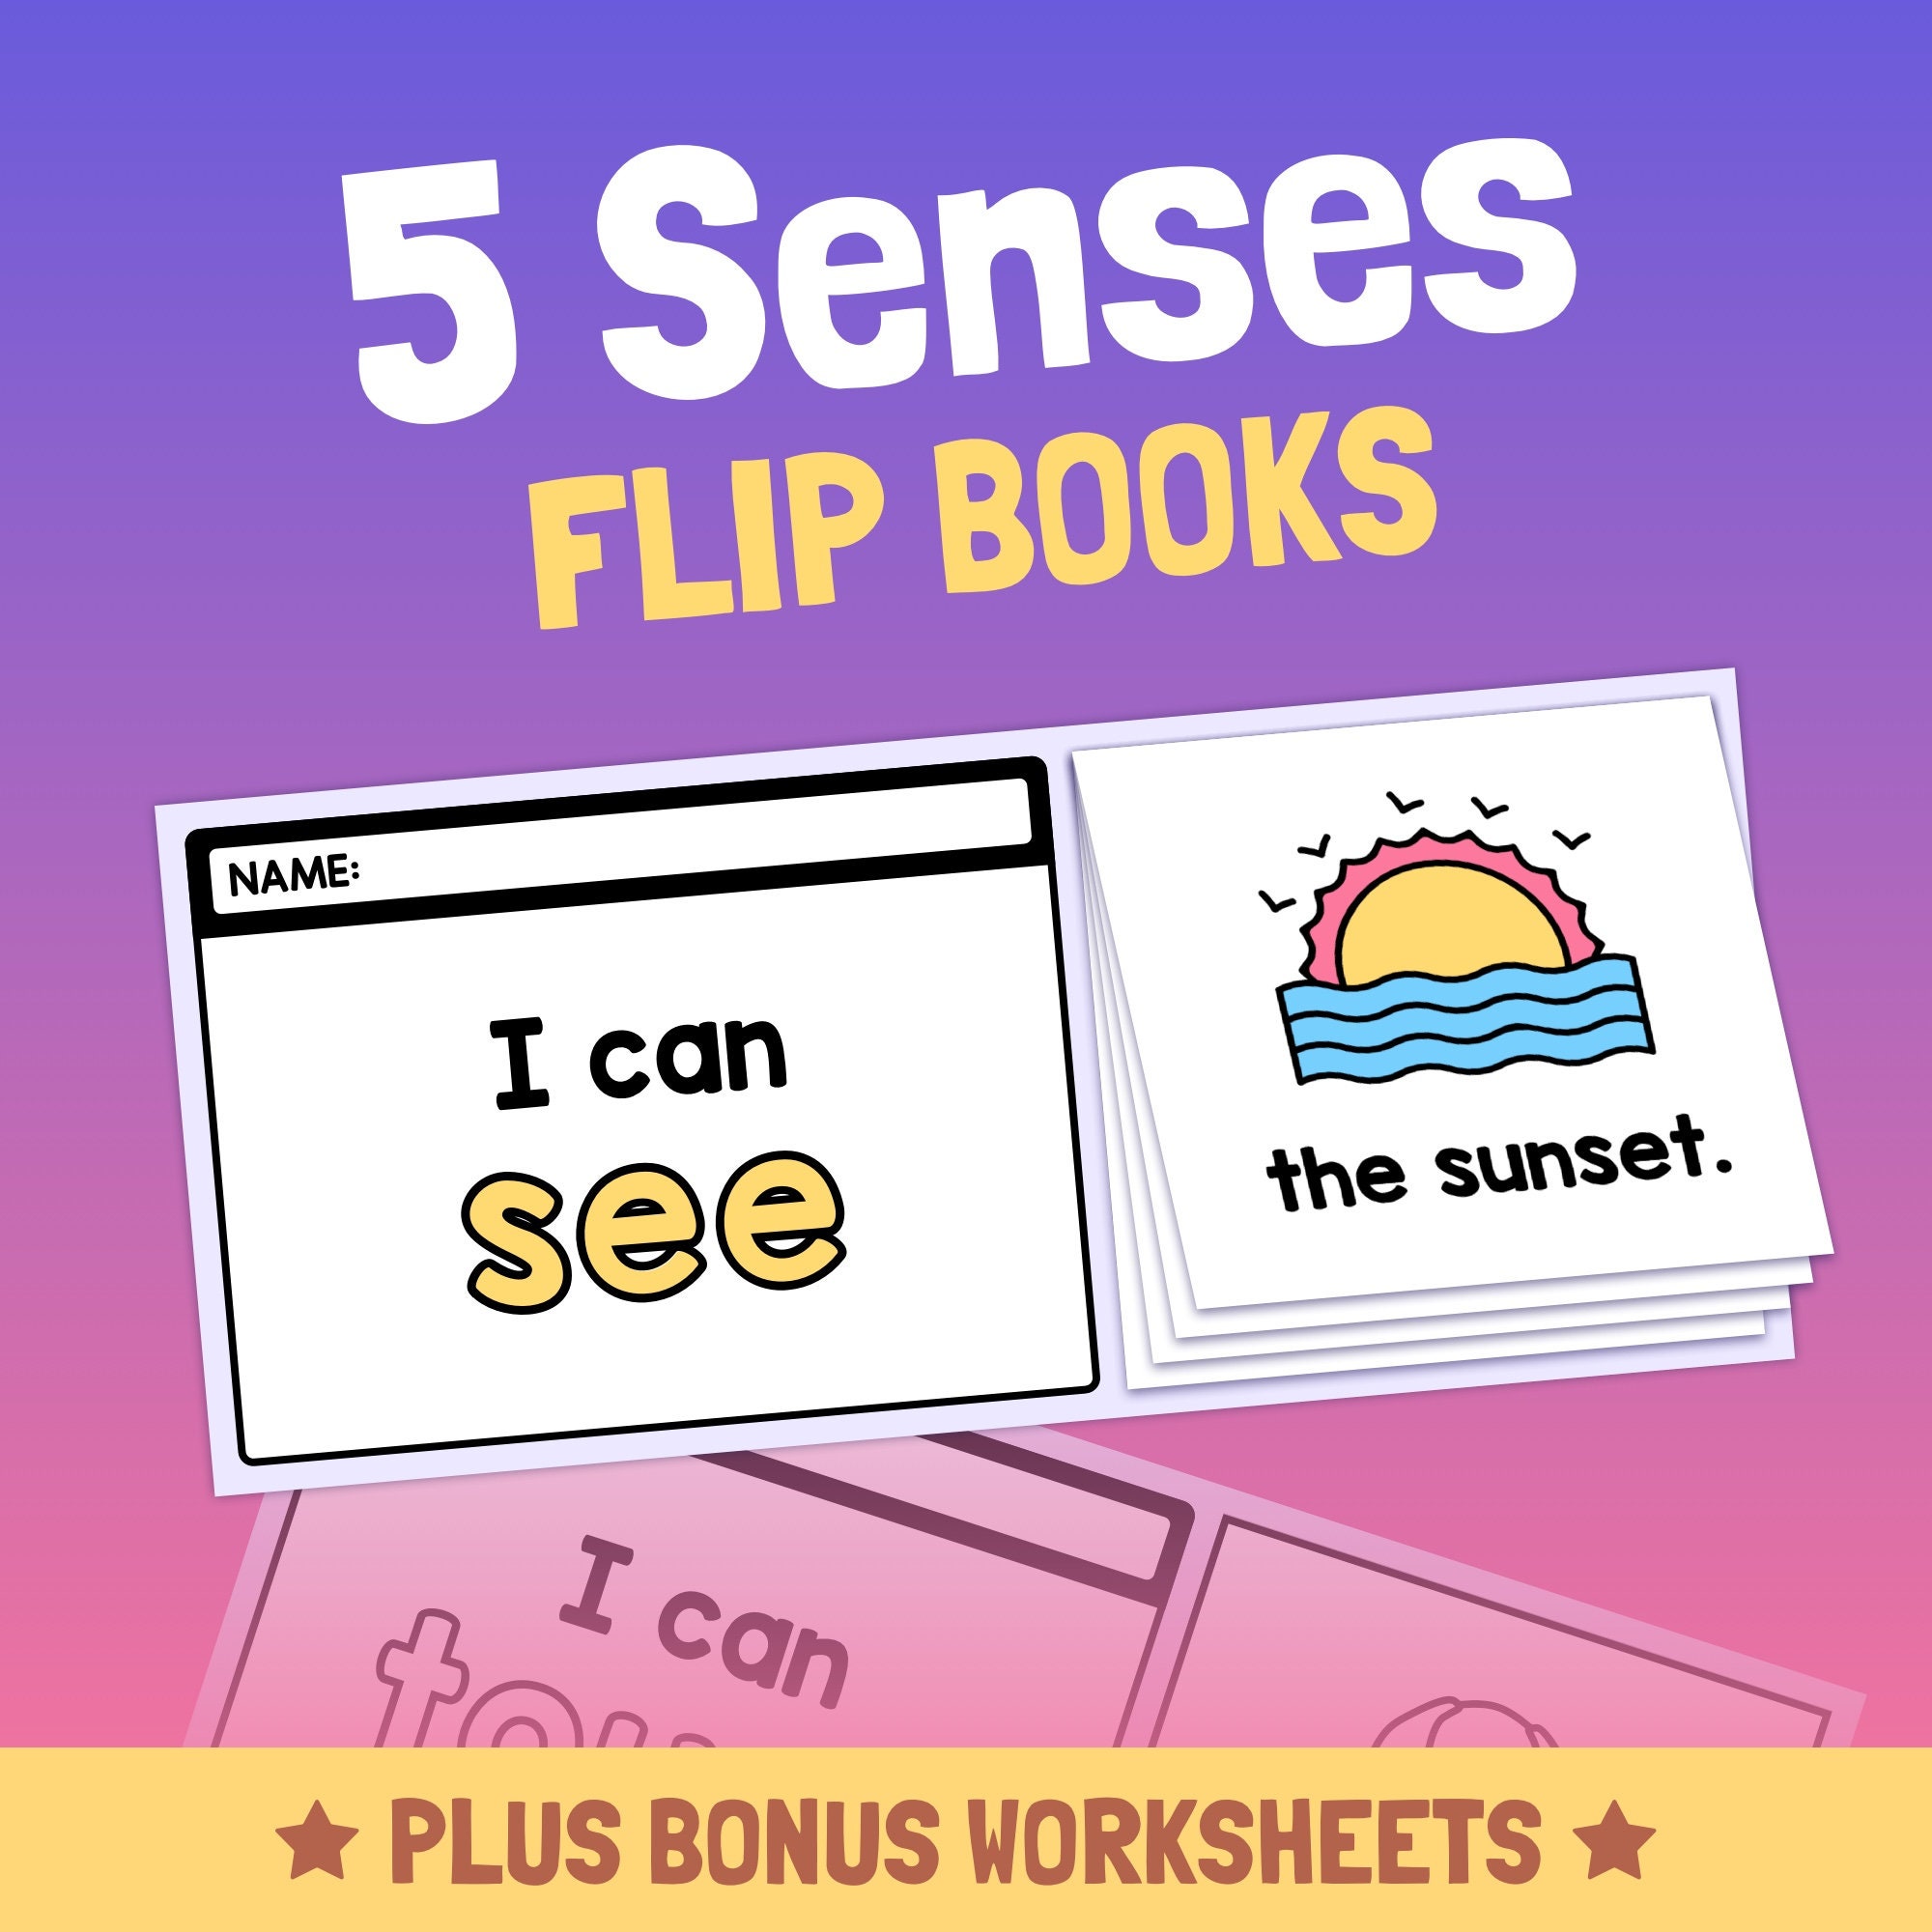 5 Senses Flip Books & Flap Book - Kinder Resources